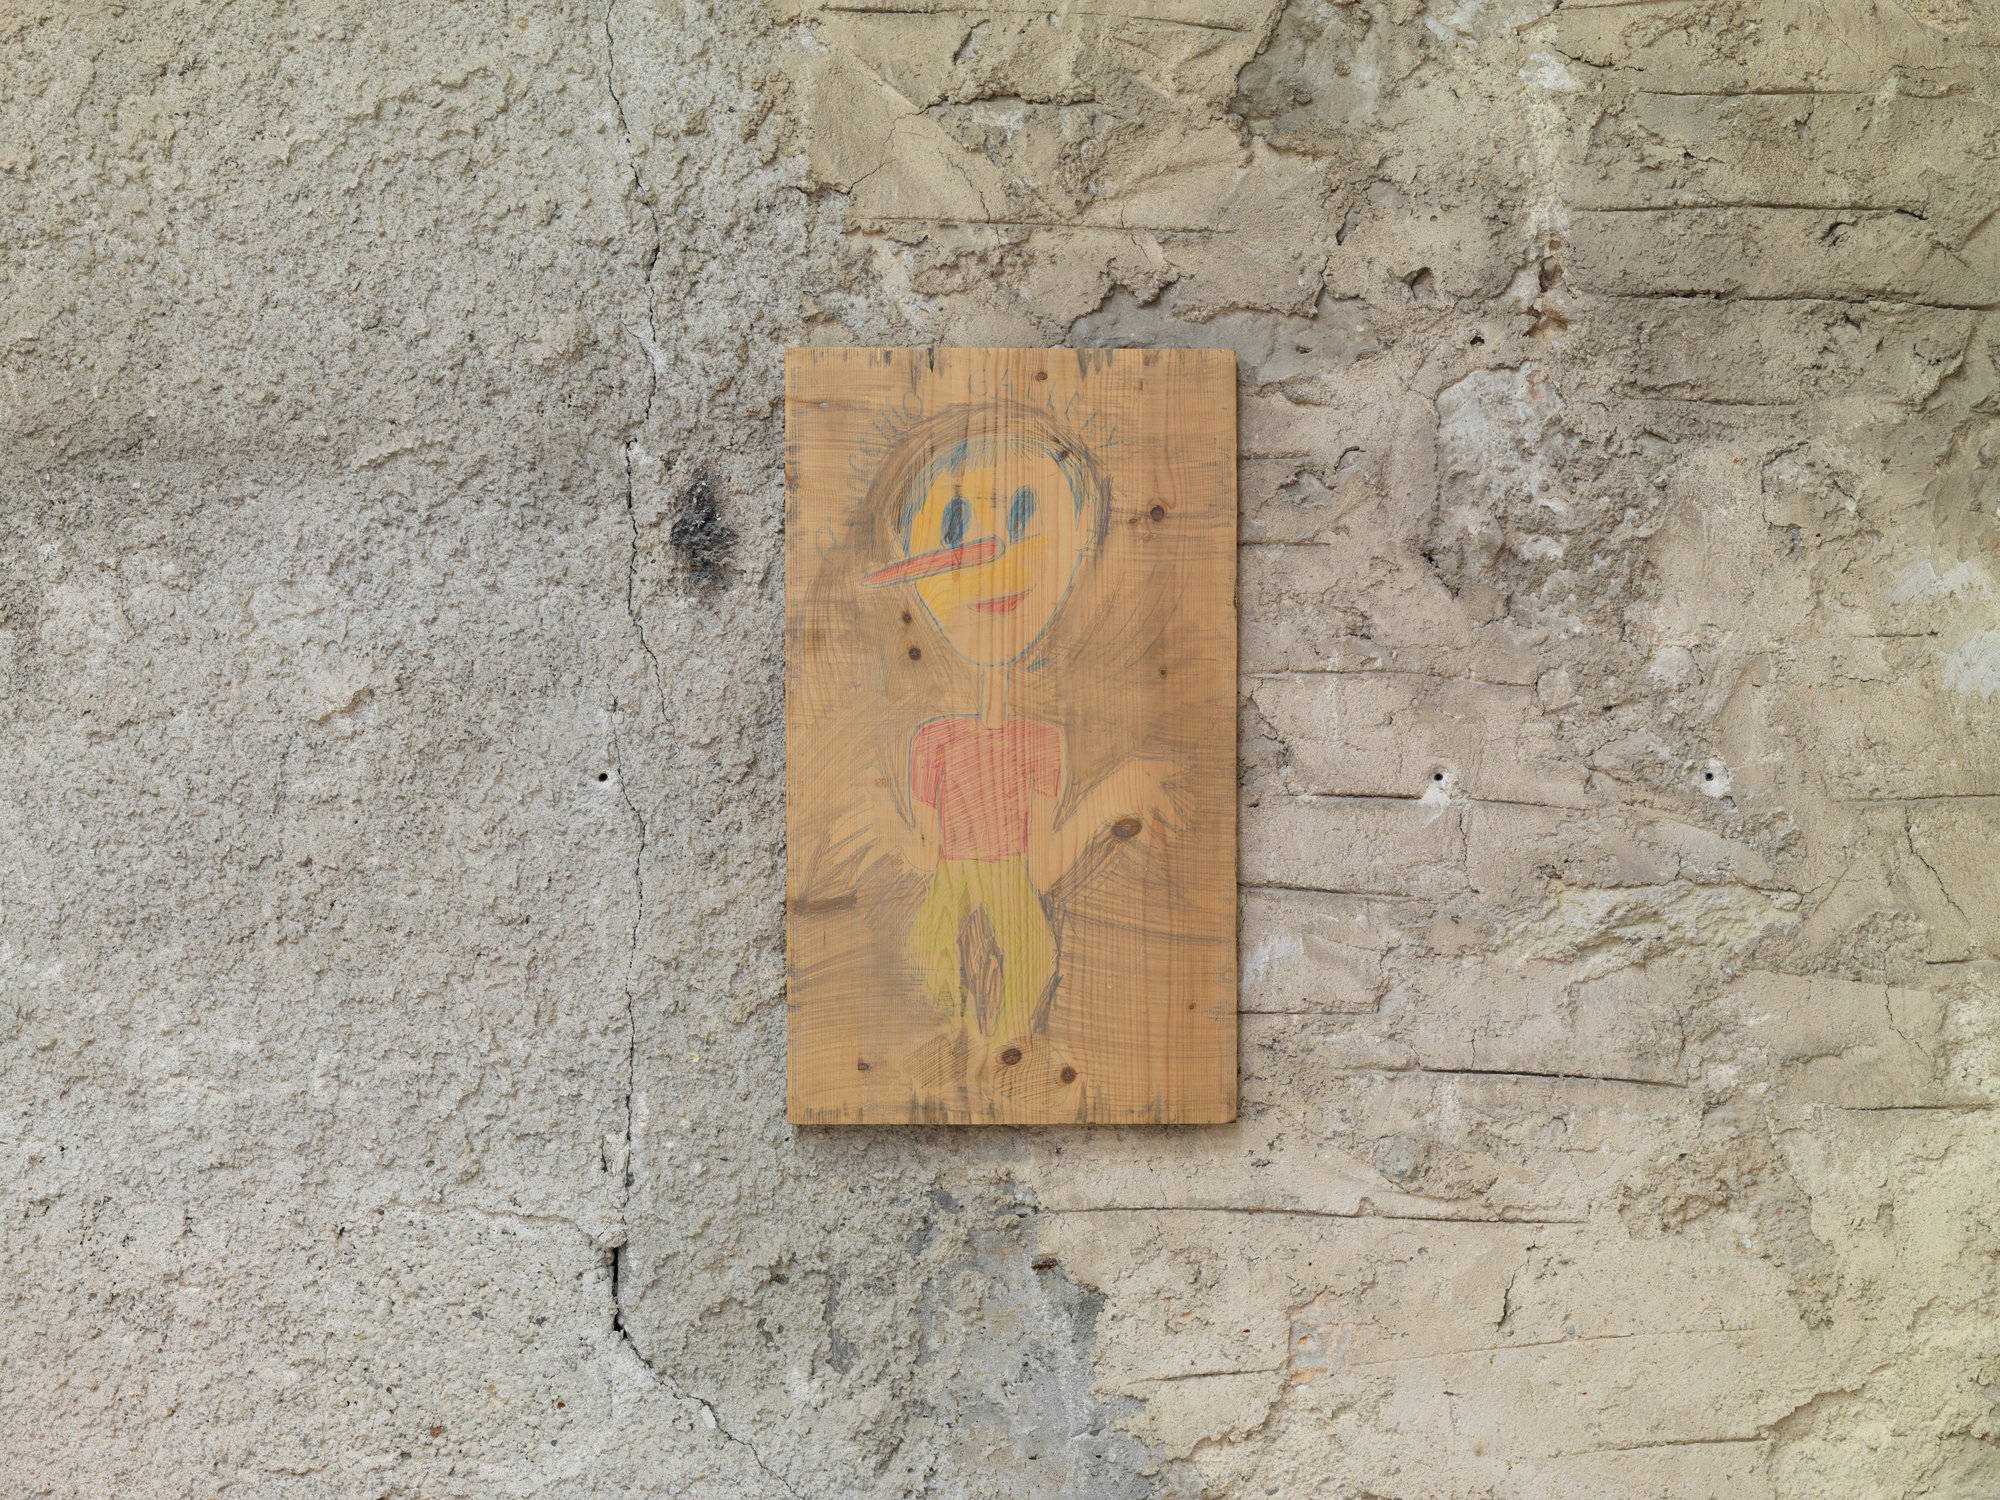 Sidsel Meineche Hansen, Gallery Pinocchio, crayon drawing on found selph, 56 x 33 cm, 2020